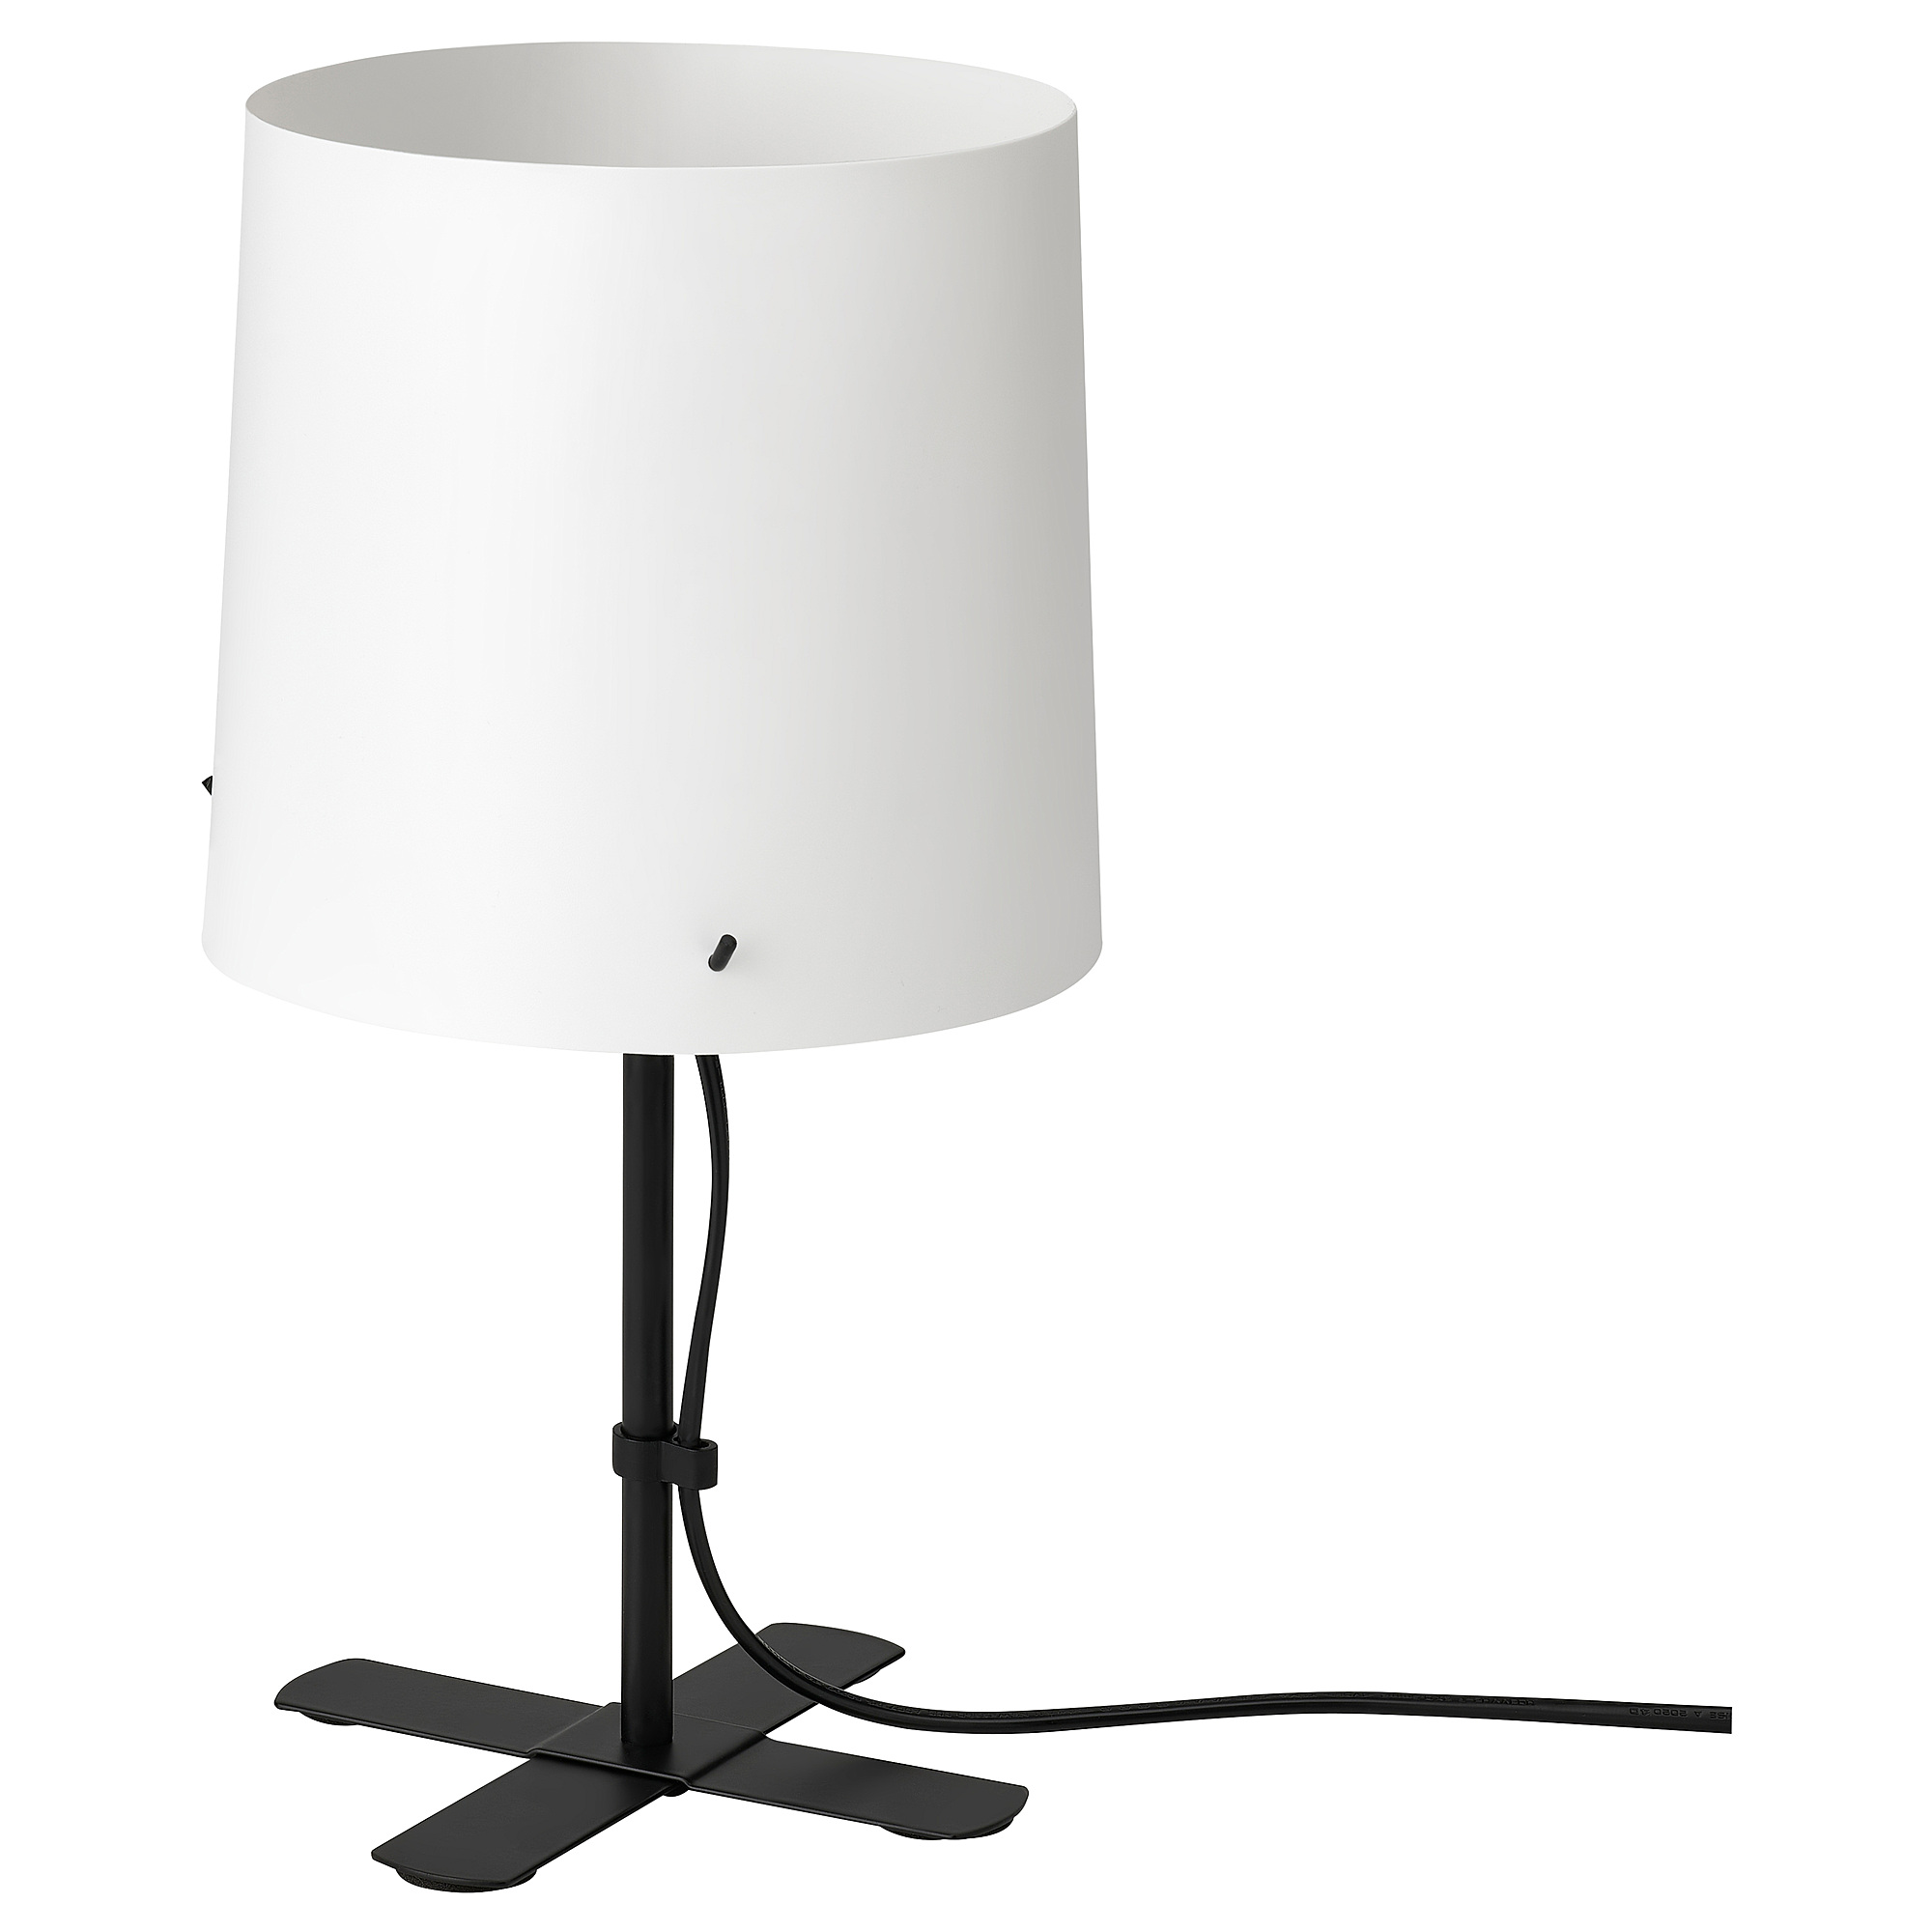 BARLAST table lamp